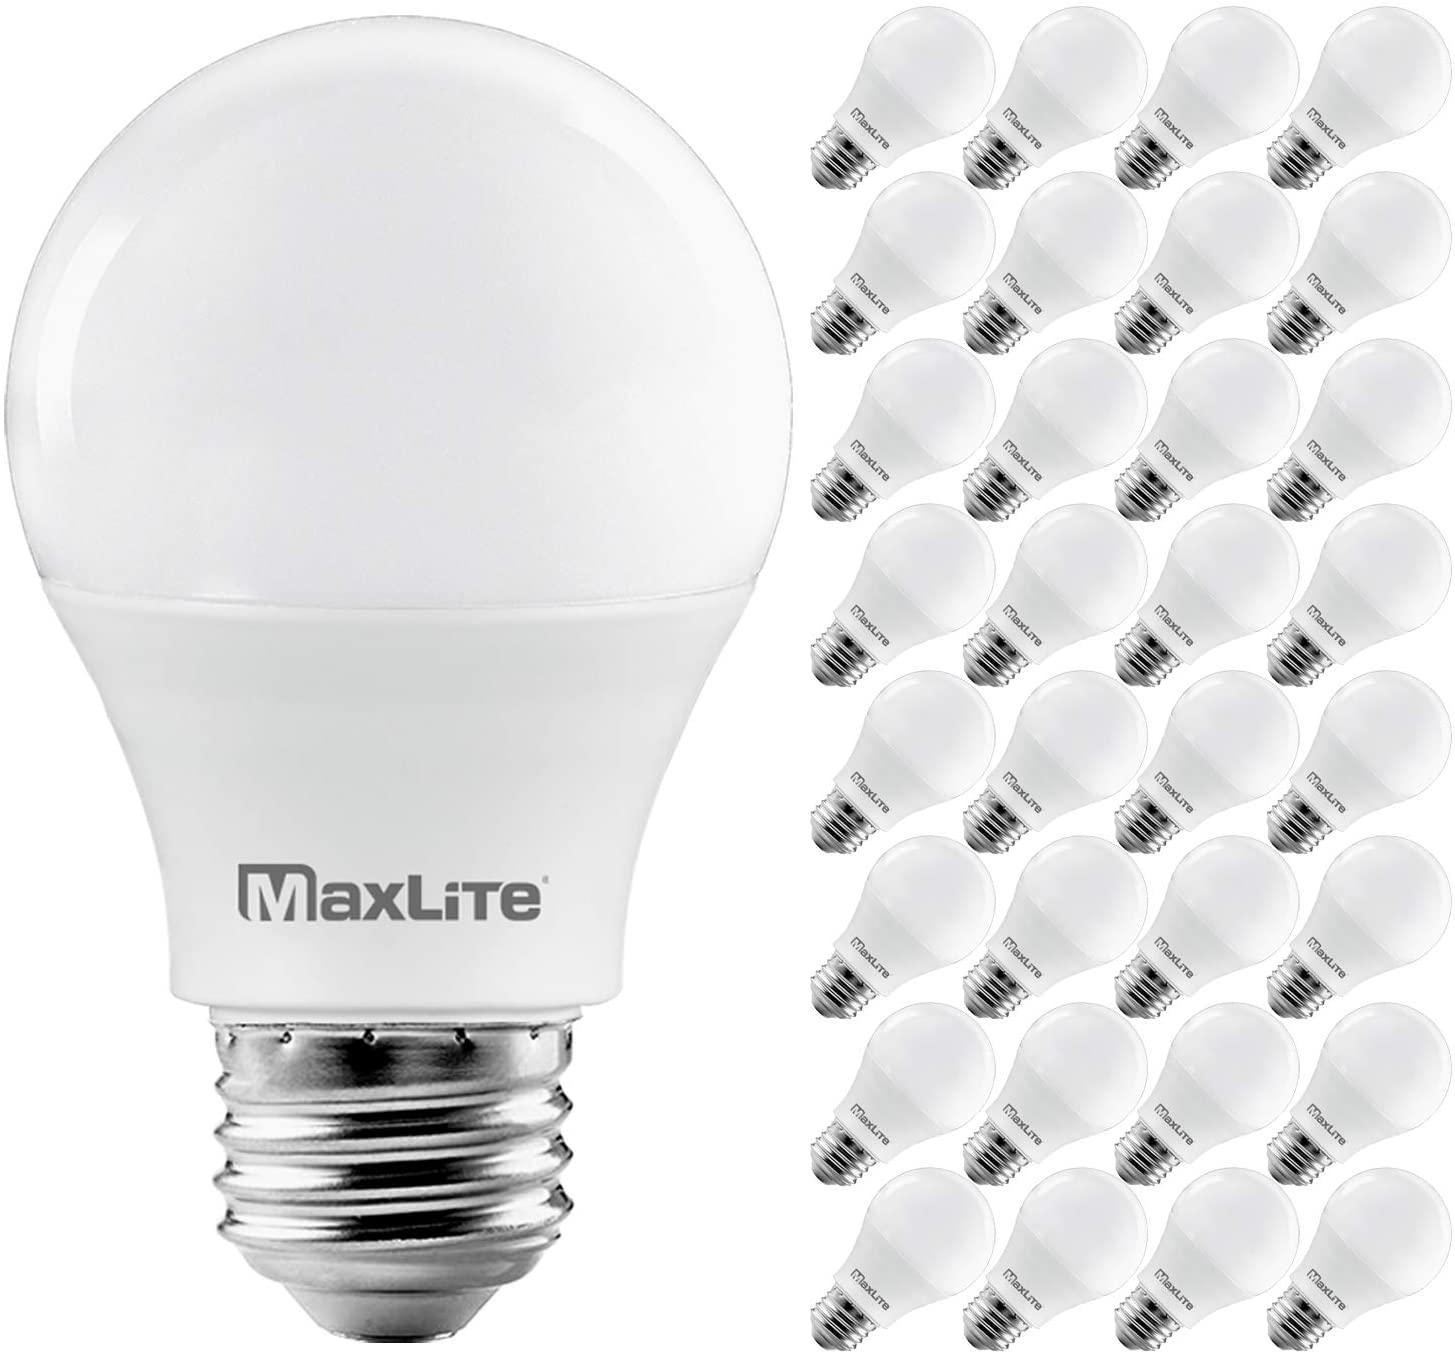 32 MaxLite A19 800 Lumen 60W LED Bulbs for $32.99 Shipped